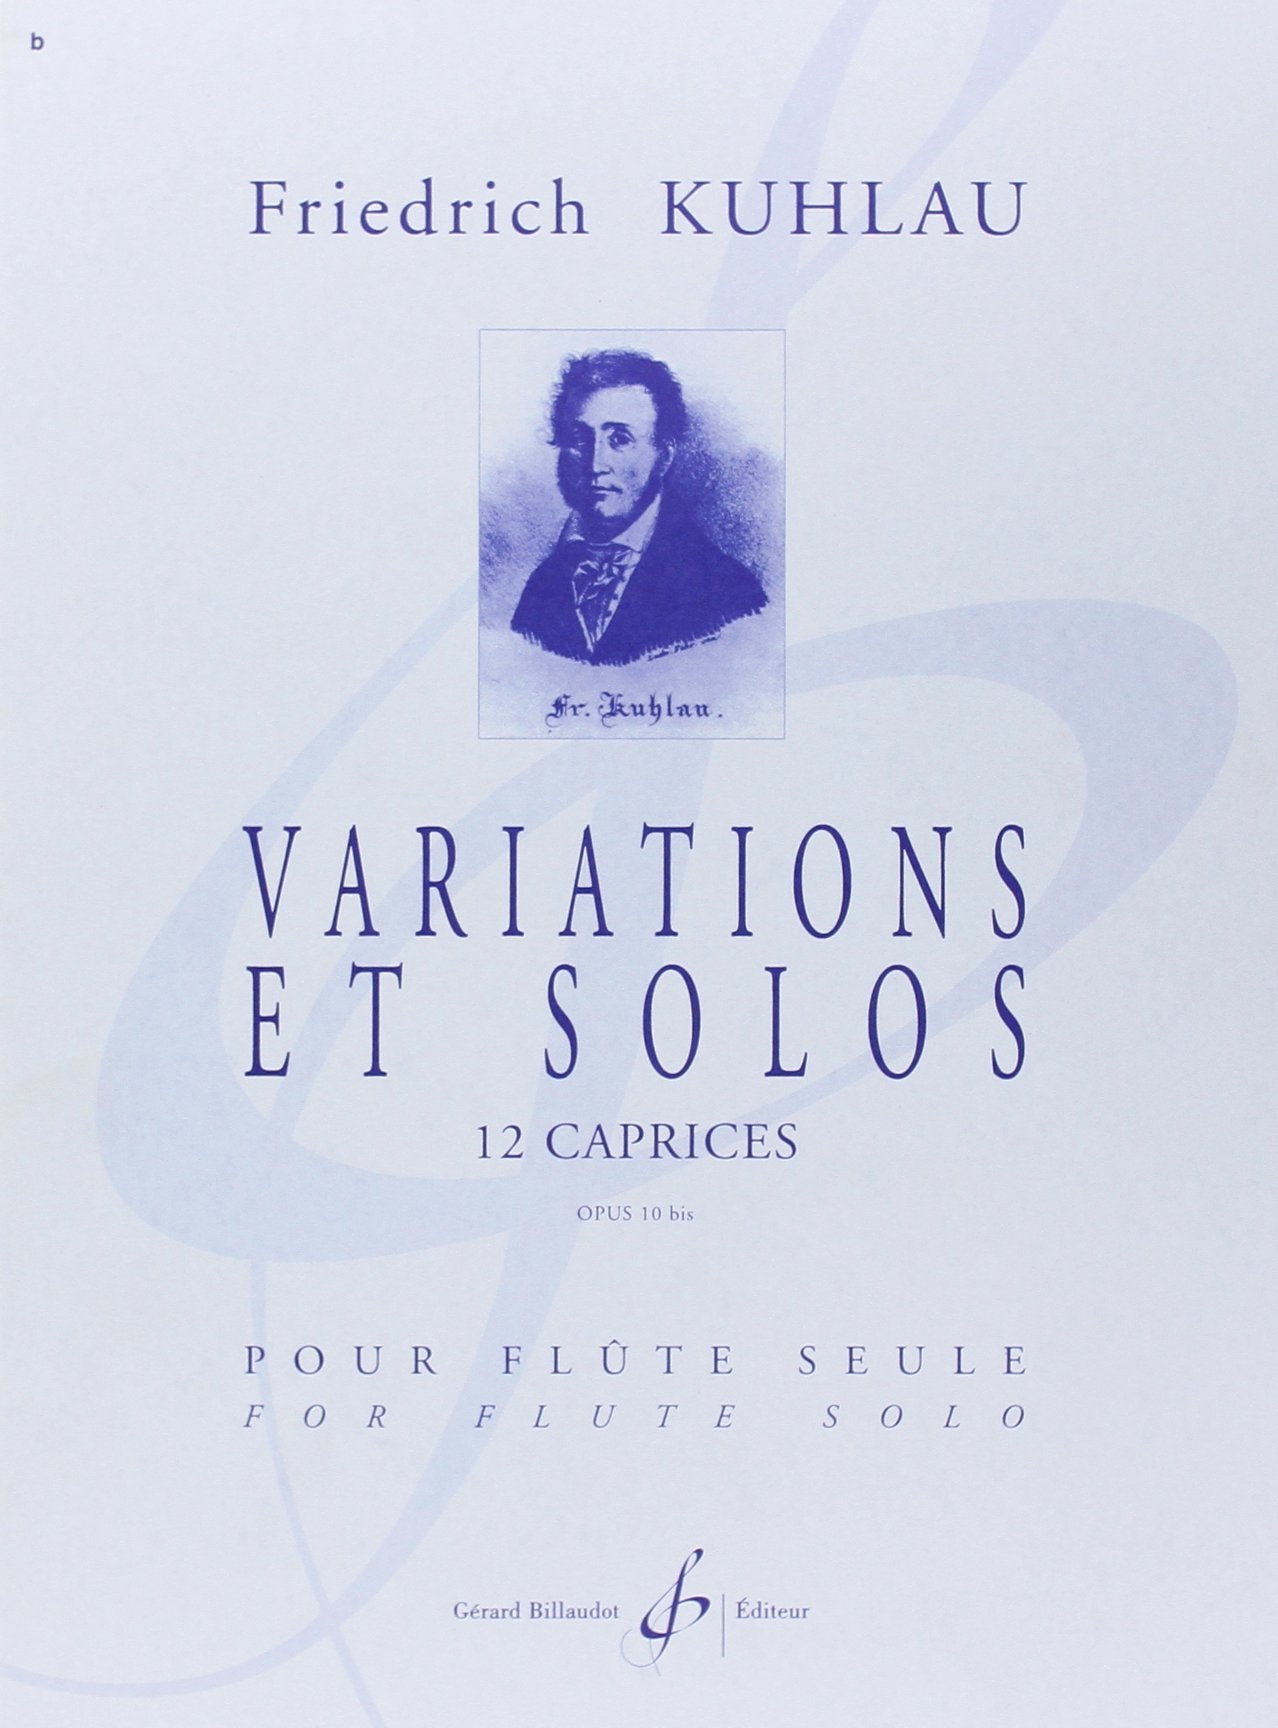 Kuhlau: Variations & Solos (12 Caprices) Op. 10 bis for Flute